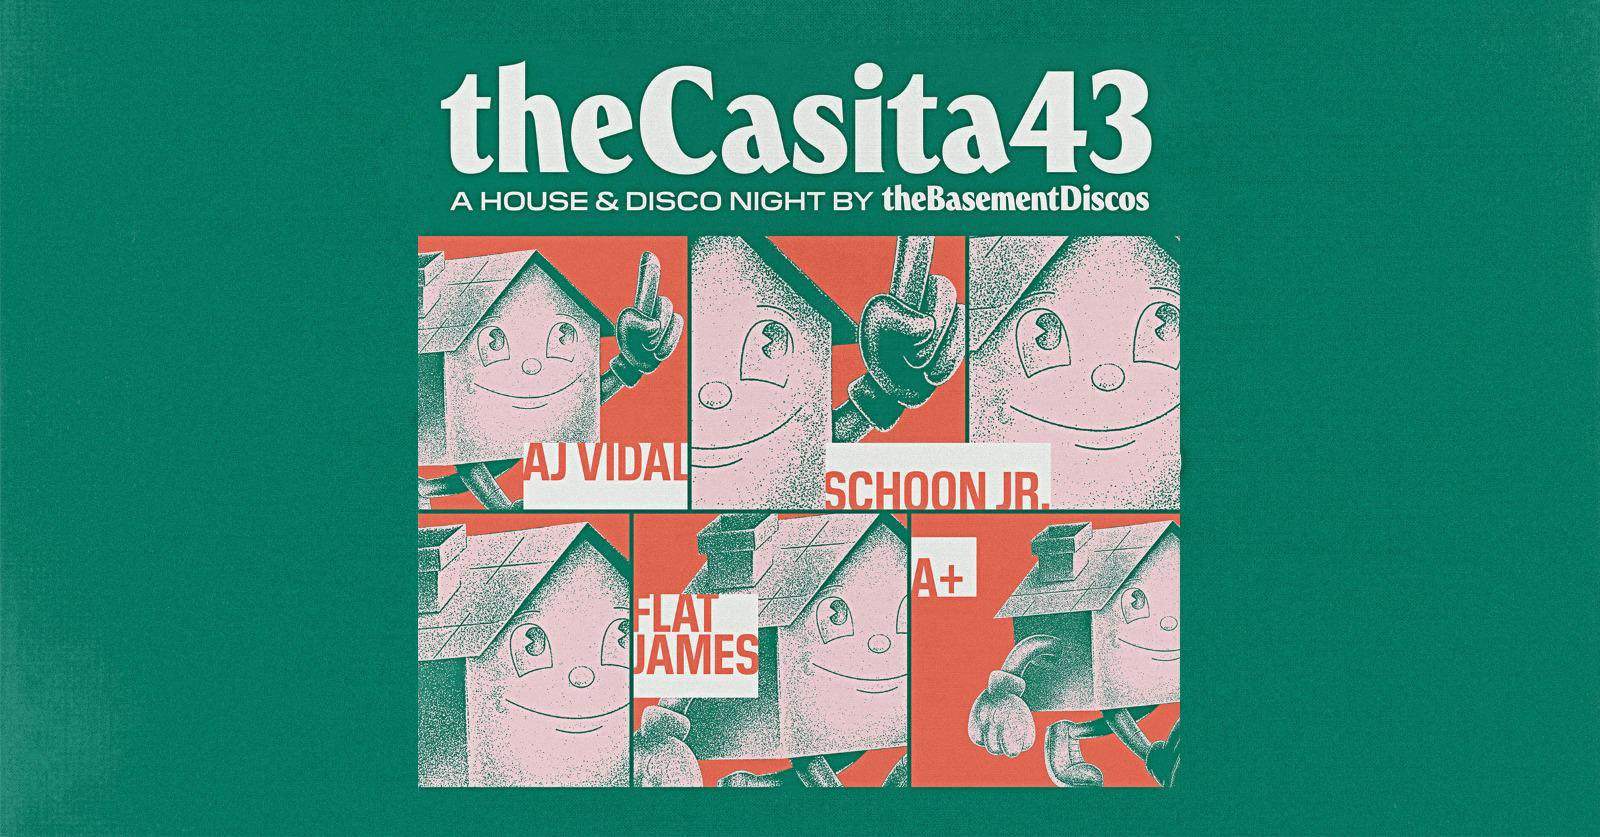 43 Presents: theCasita43 - フライヤー表